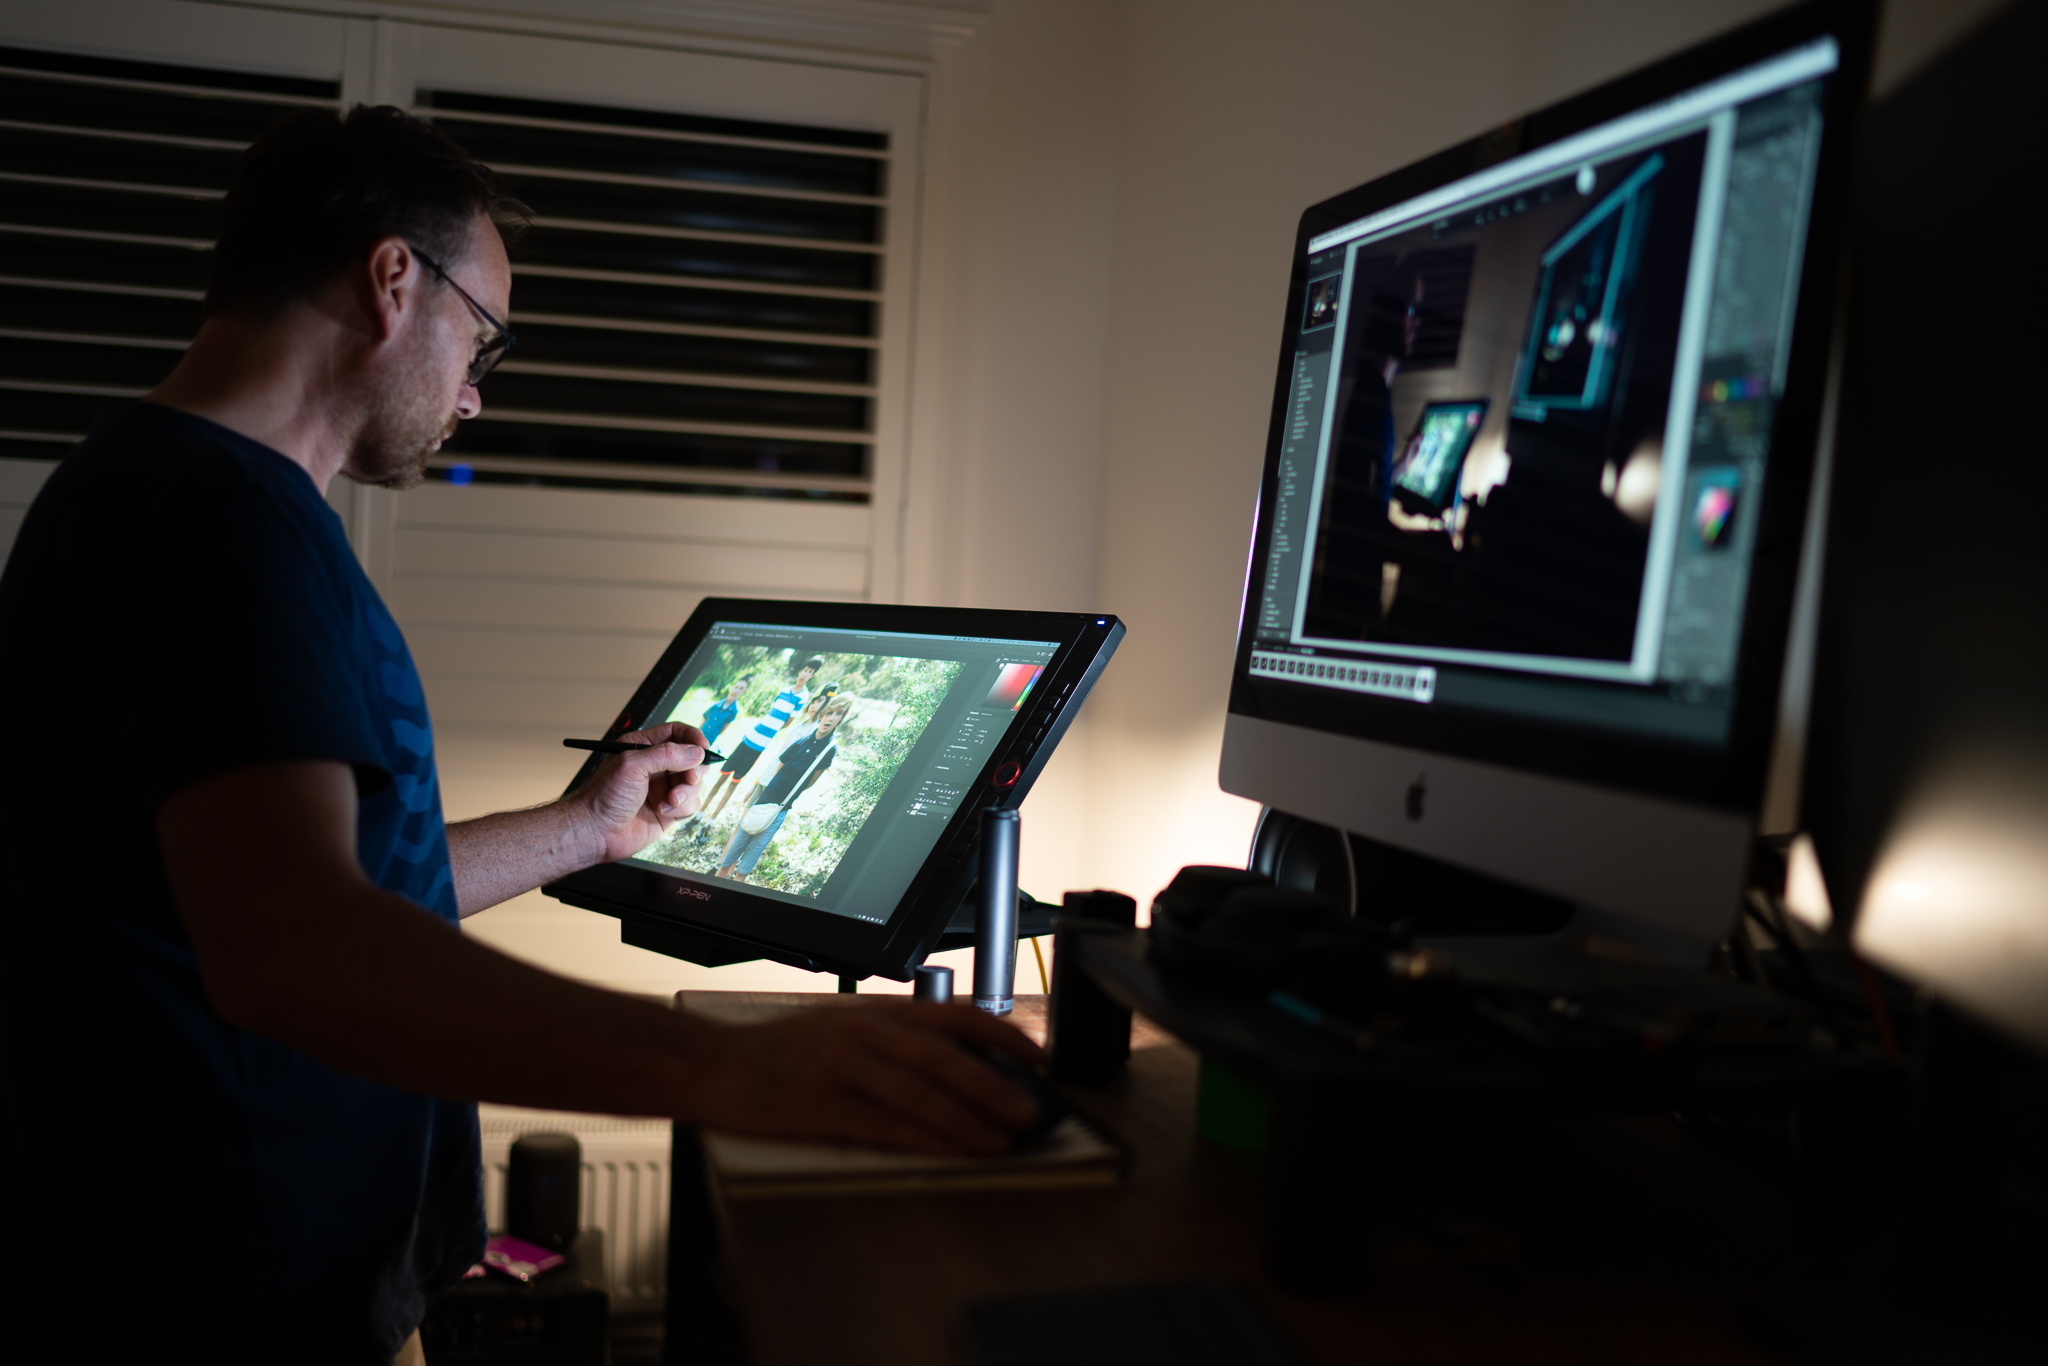 XP-Pen Artist 24 Pro Review: A Gorgeous Graphics Tablet for Photographers